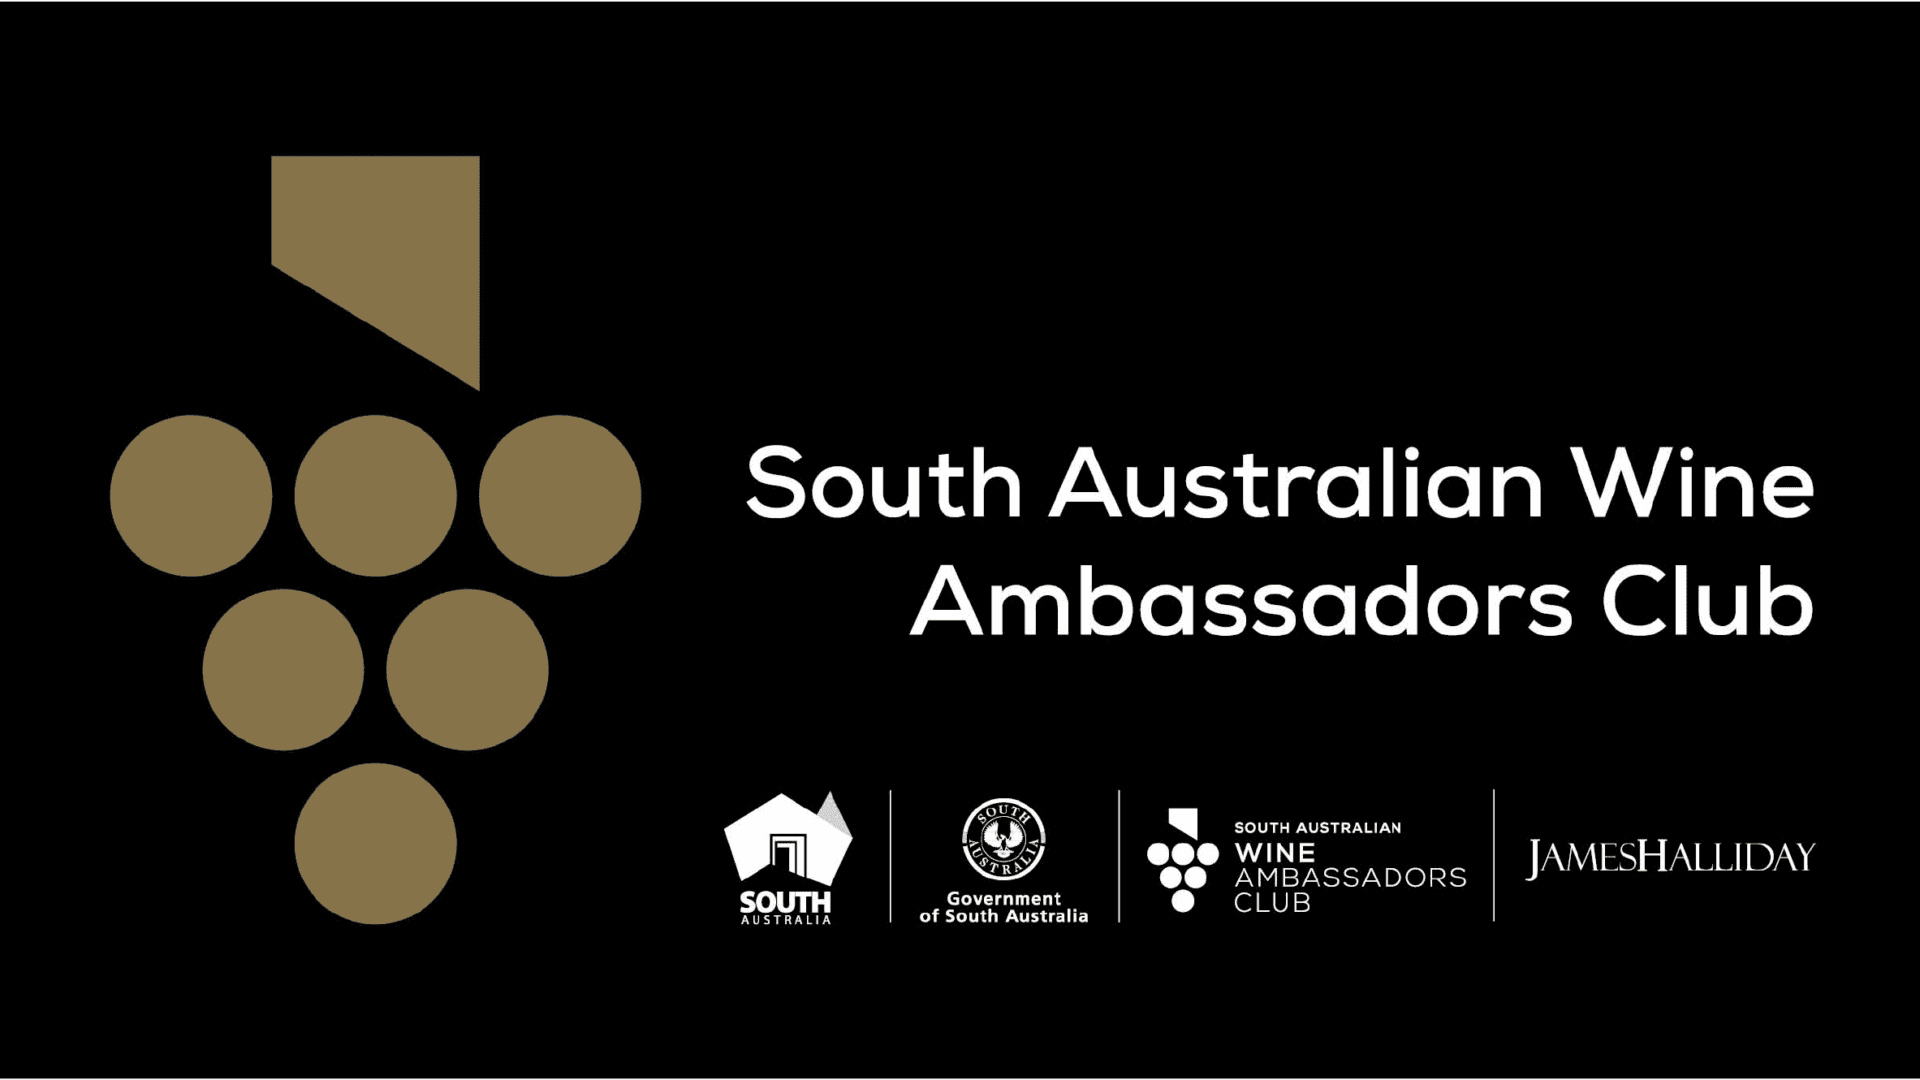 South Australian Wine Ambassadors Club Showcase and Tasting - WineNow